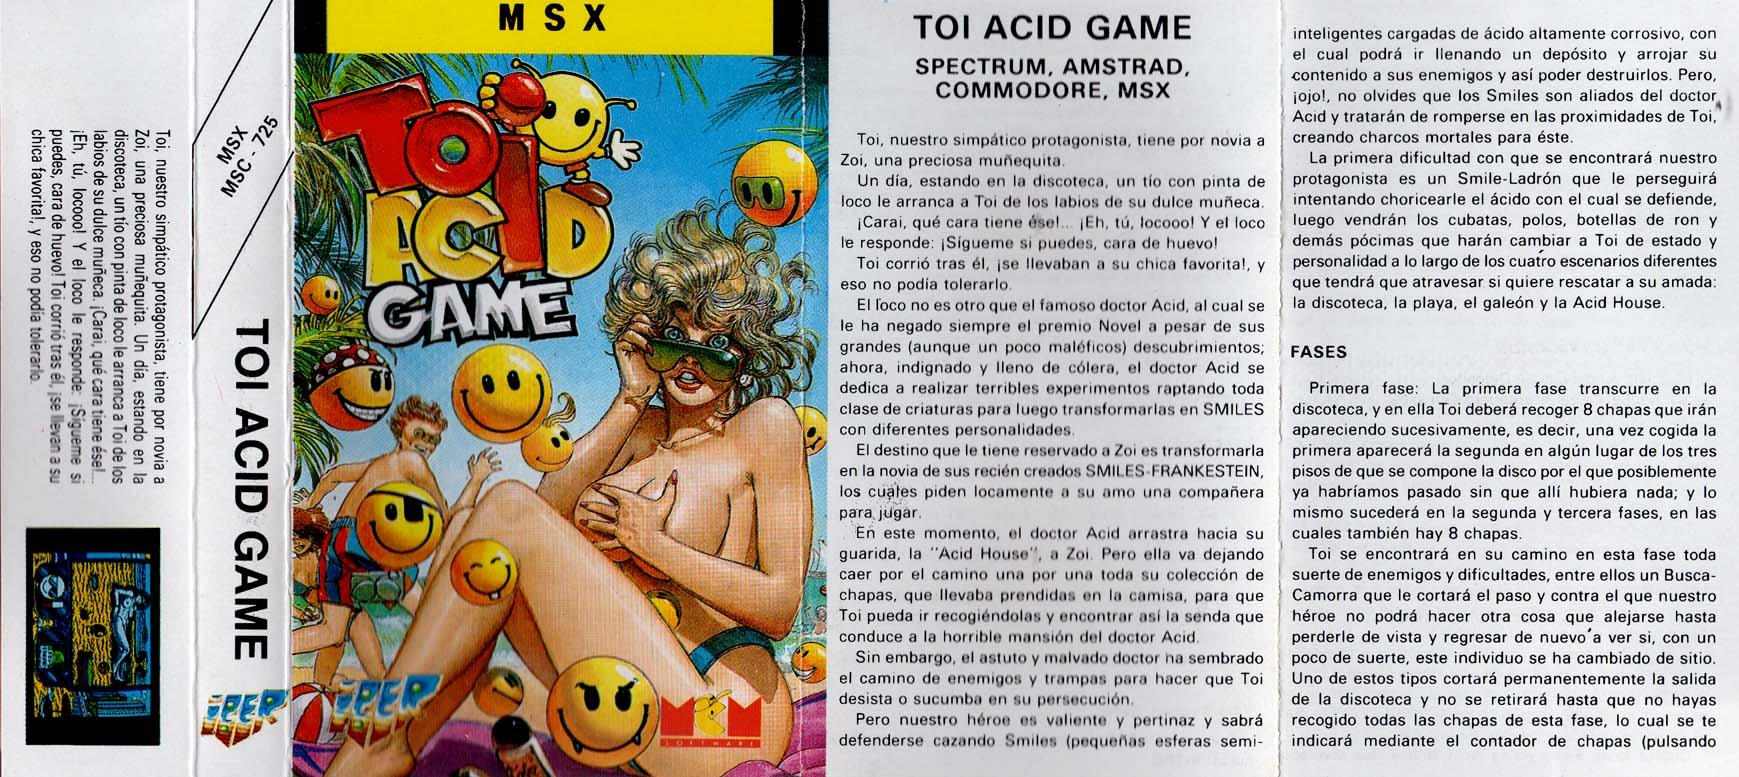 Caratula de Toi Acid Game para MSX